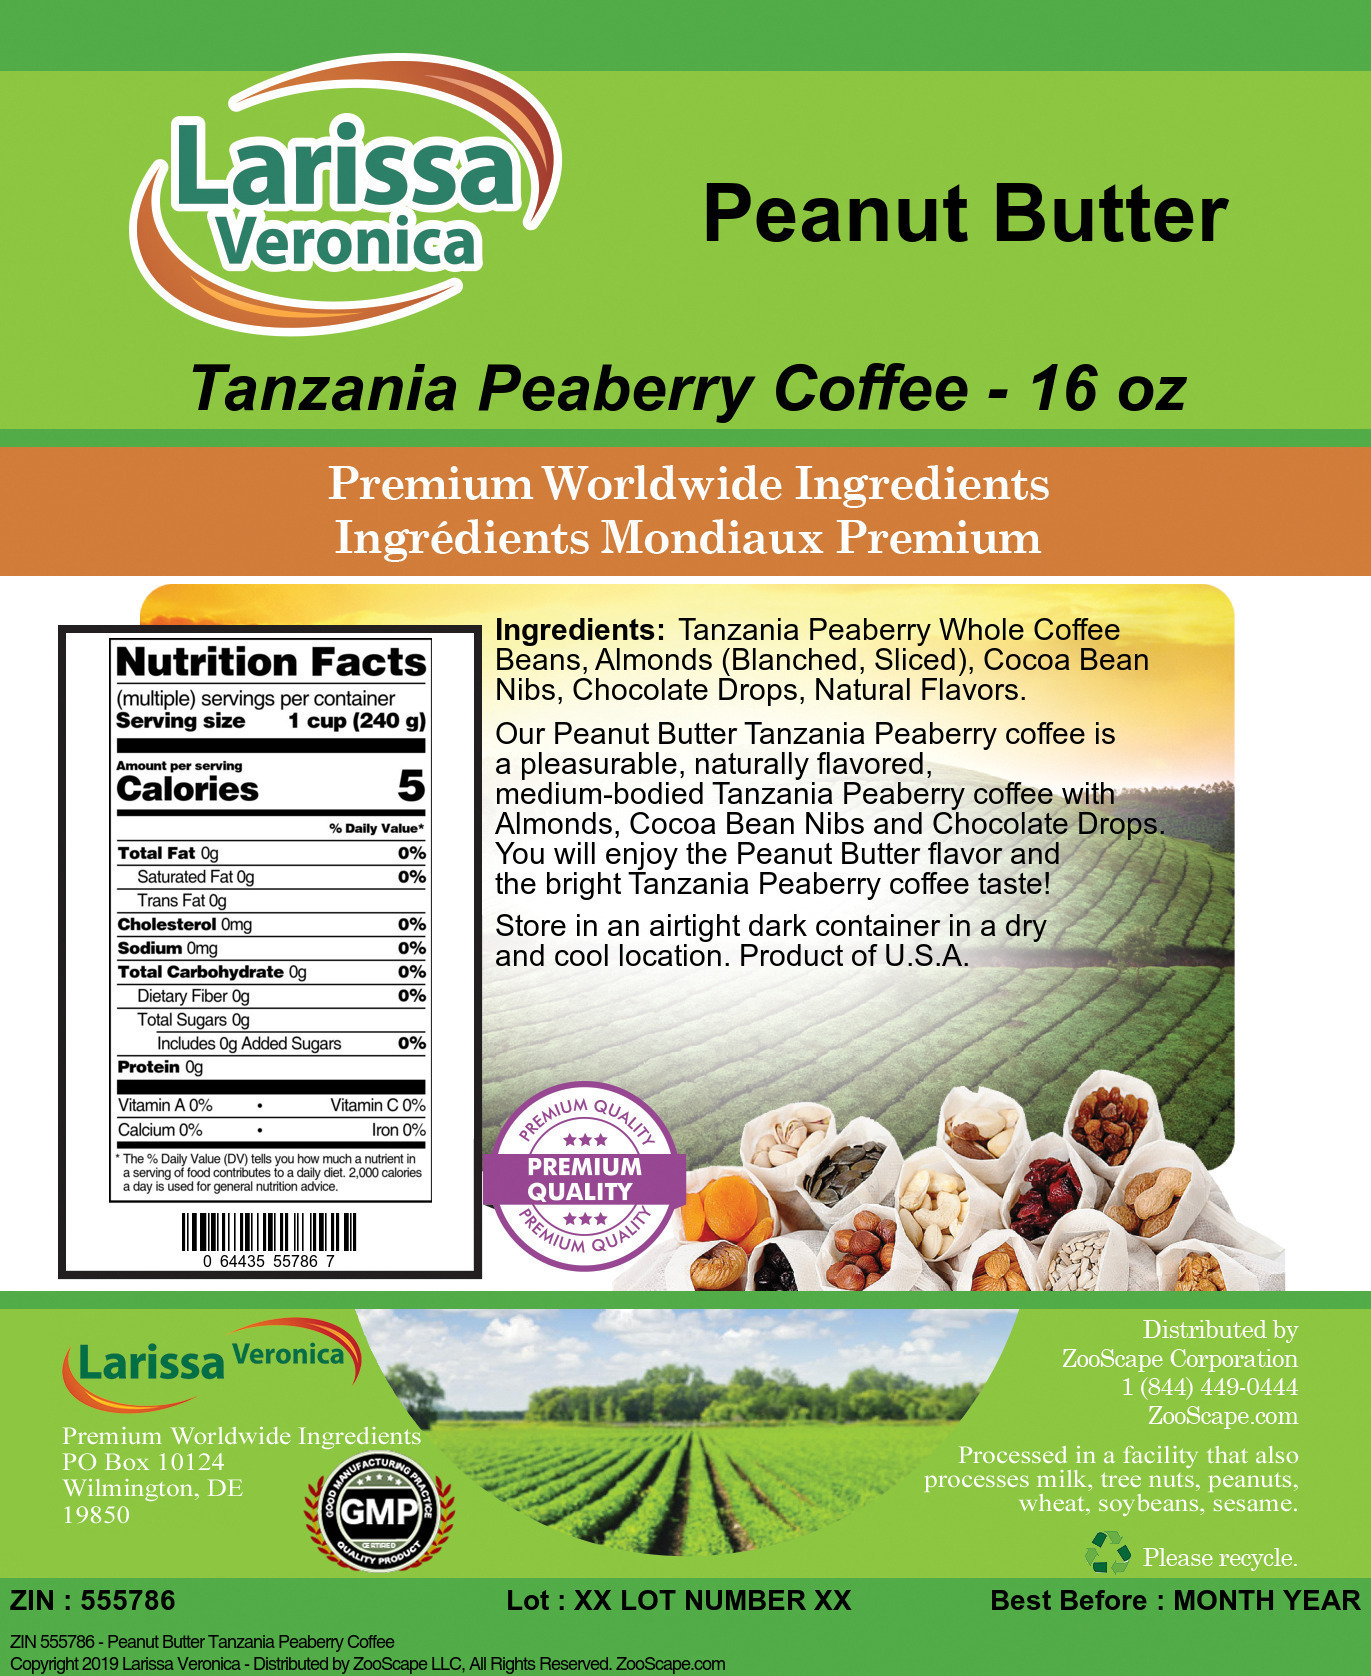 Peanut Butter Tanzania Peaberry Coffee - Label